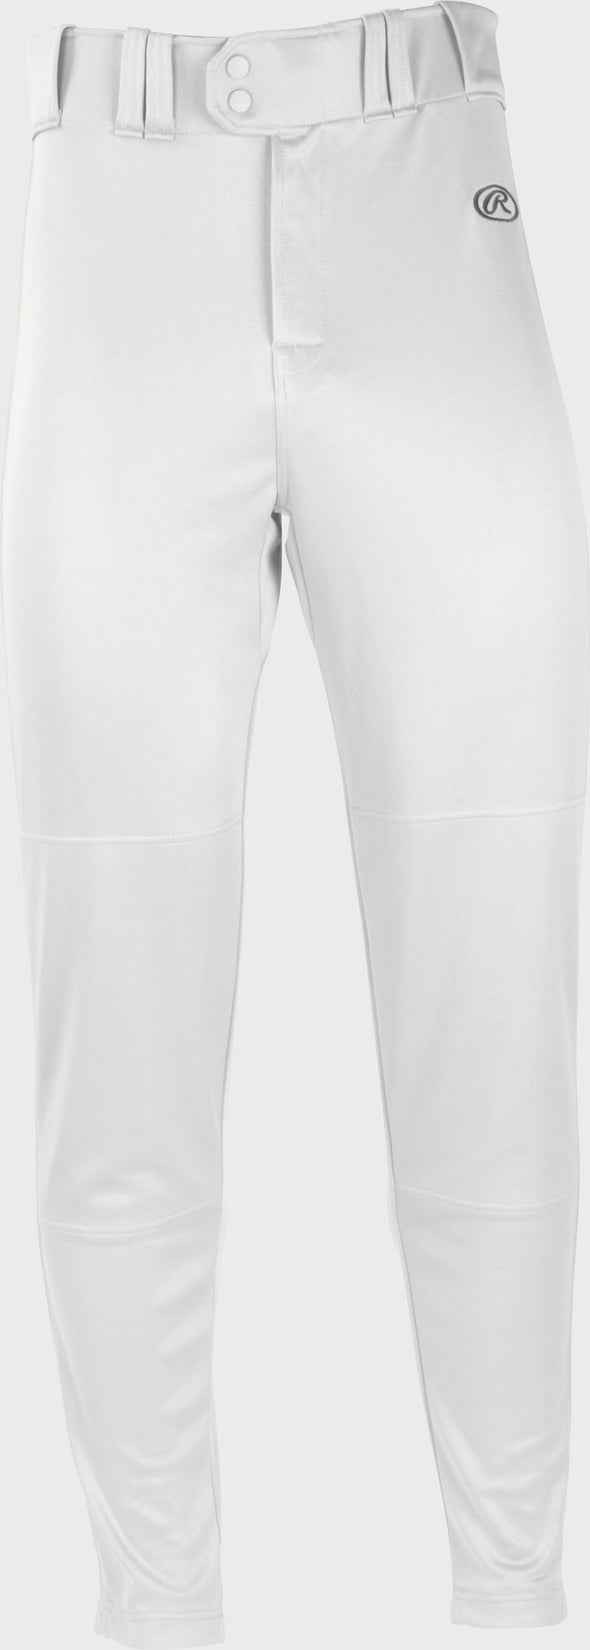 Rawlings Launch Jogger Style Baseball Pants, Adult & Youth: LNCHJG, YLNCHJG